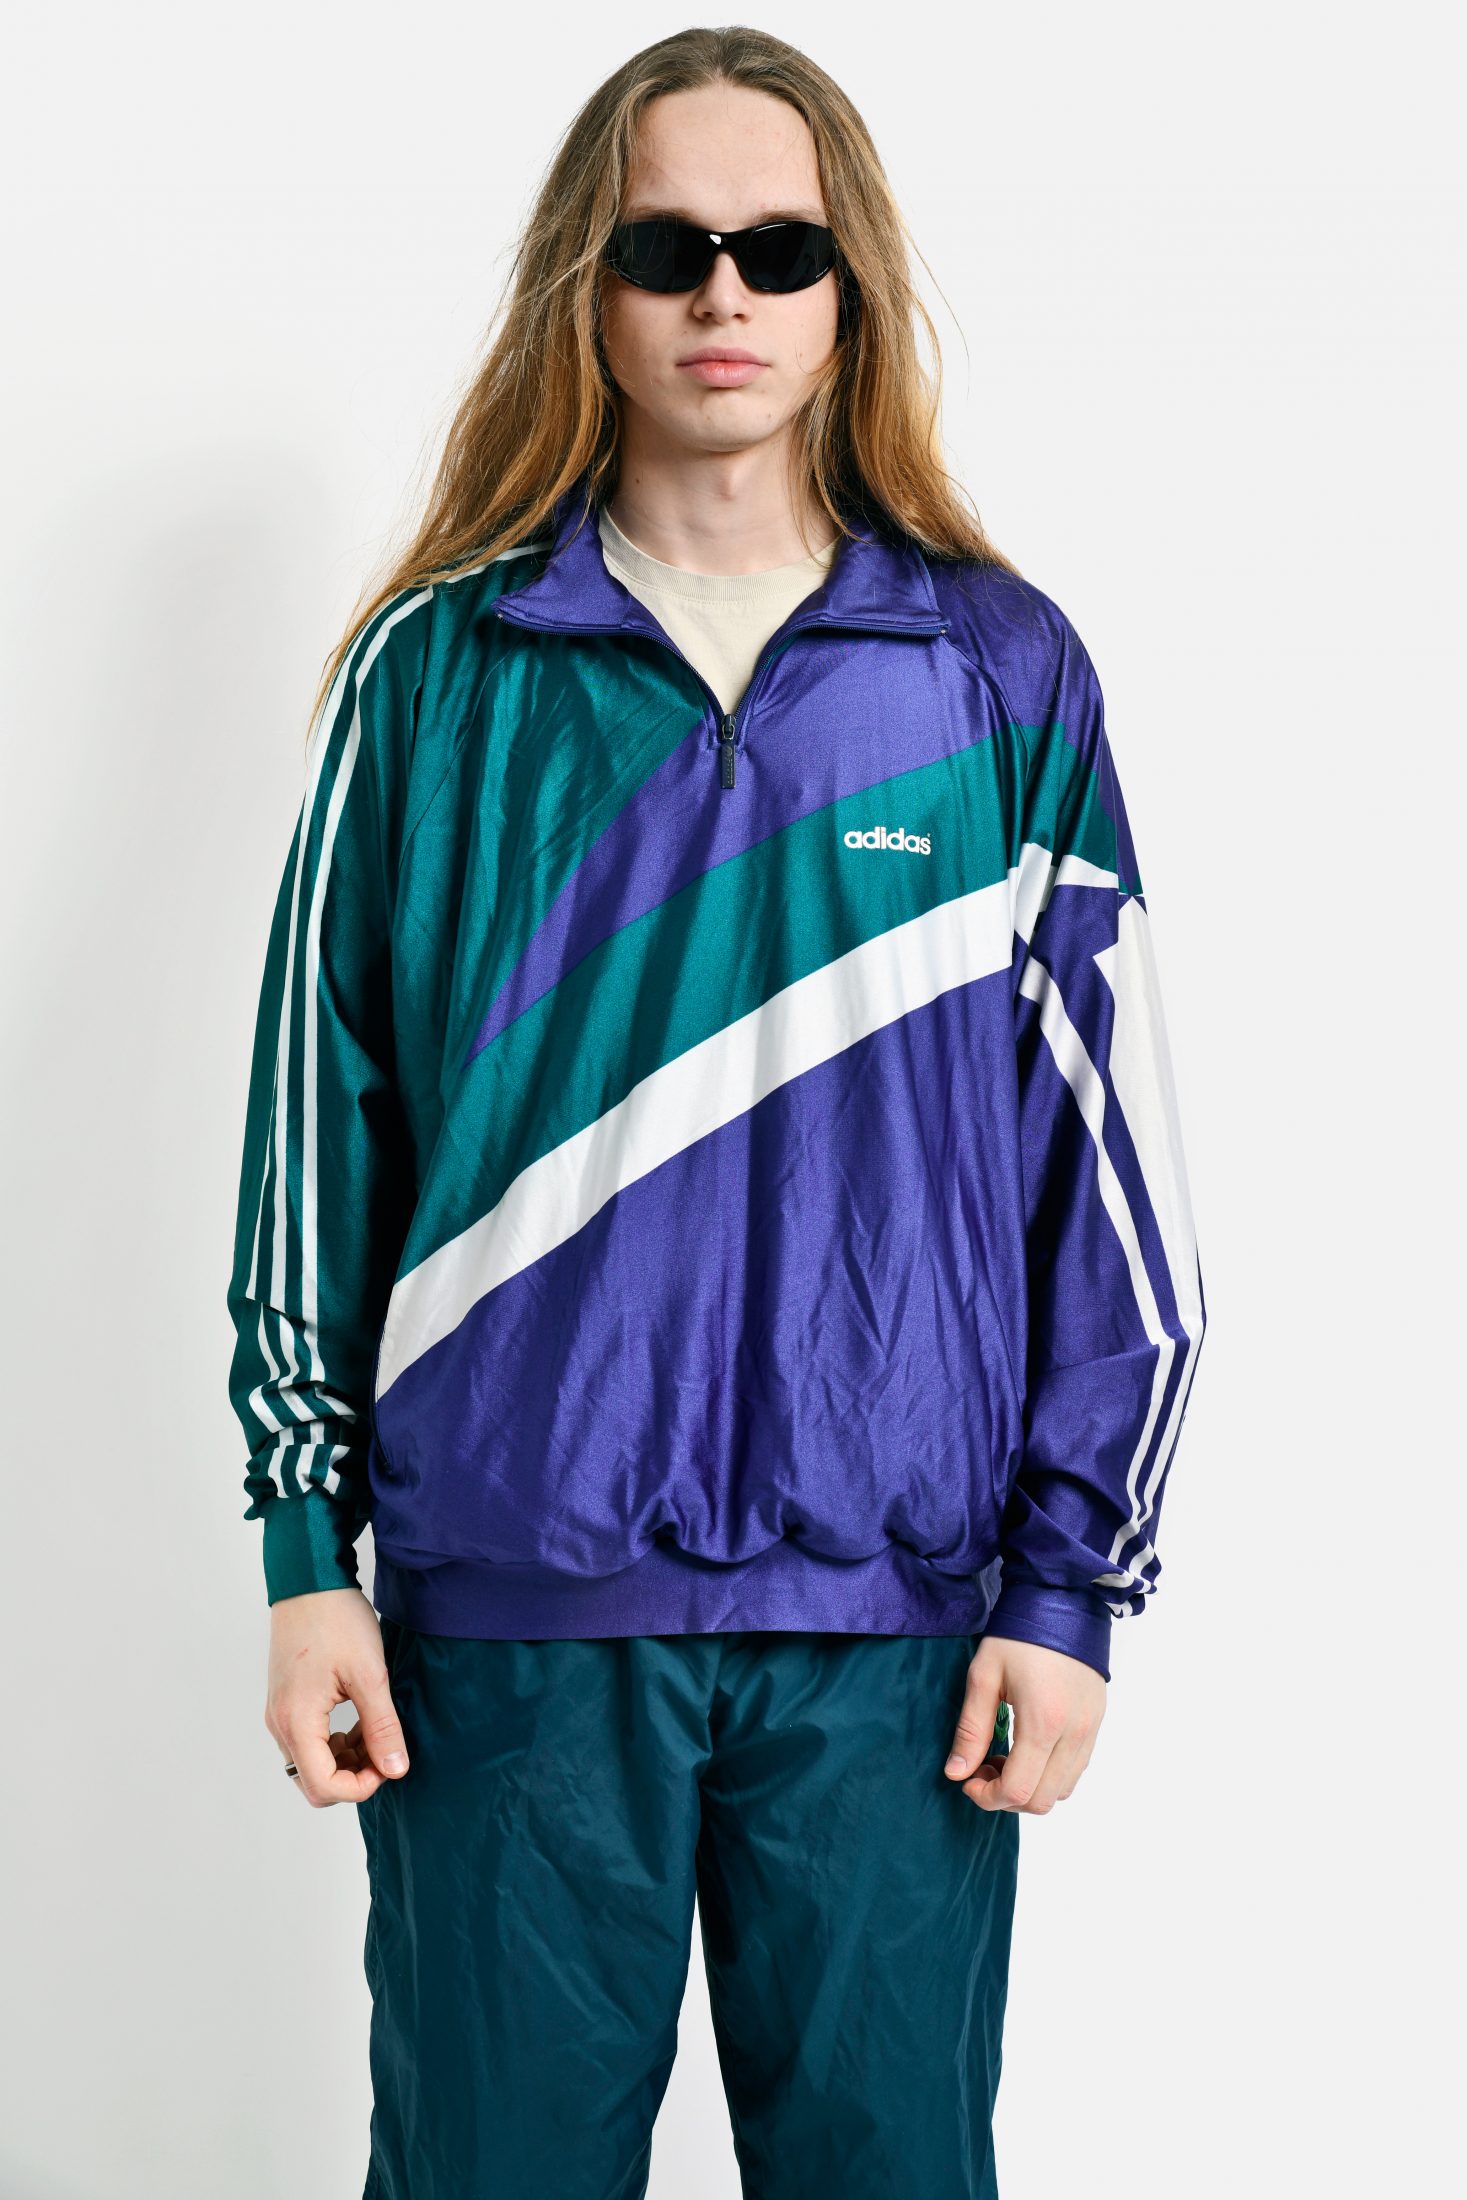 90s sports ADIDAS jacket | Vintage clothes online for men